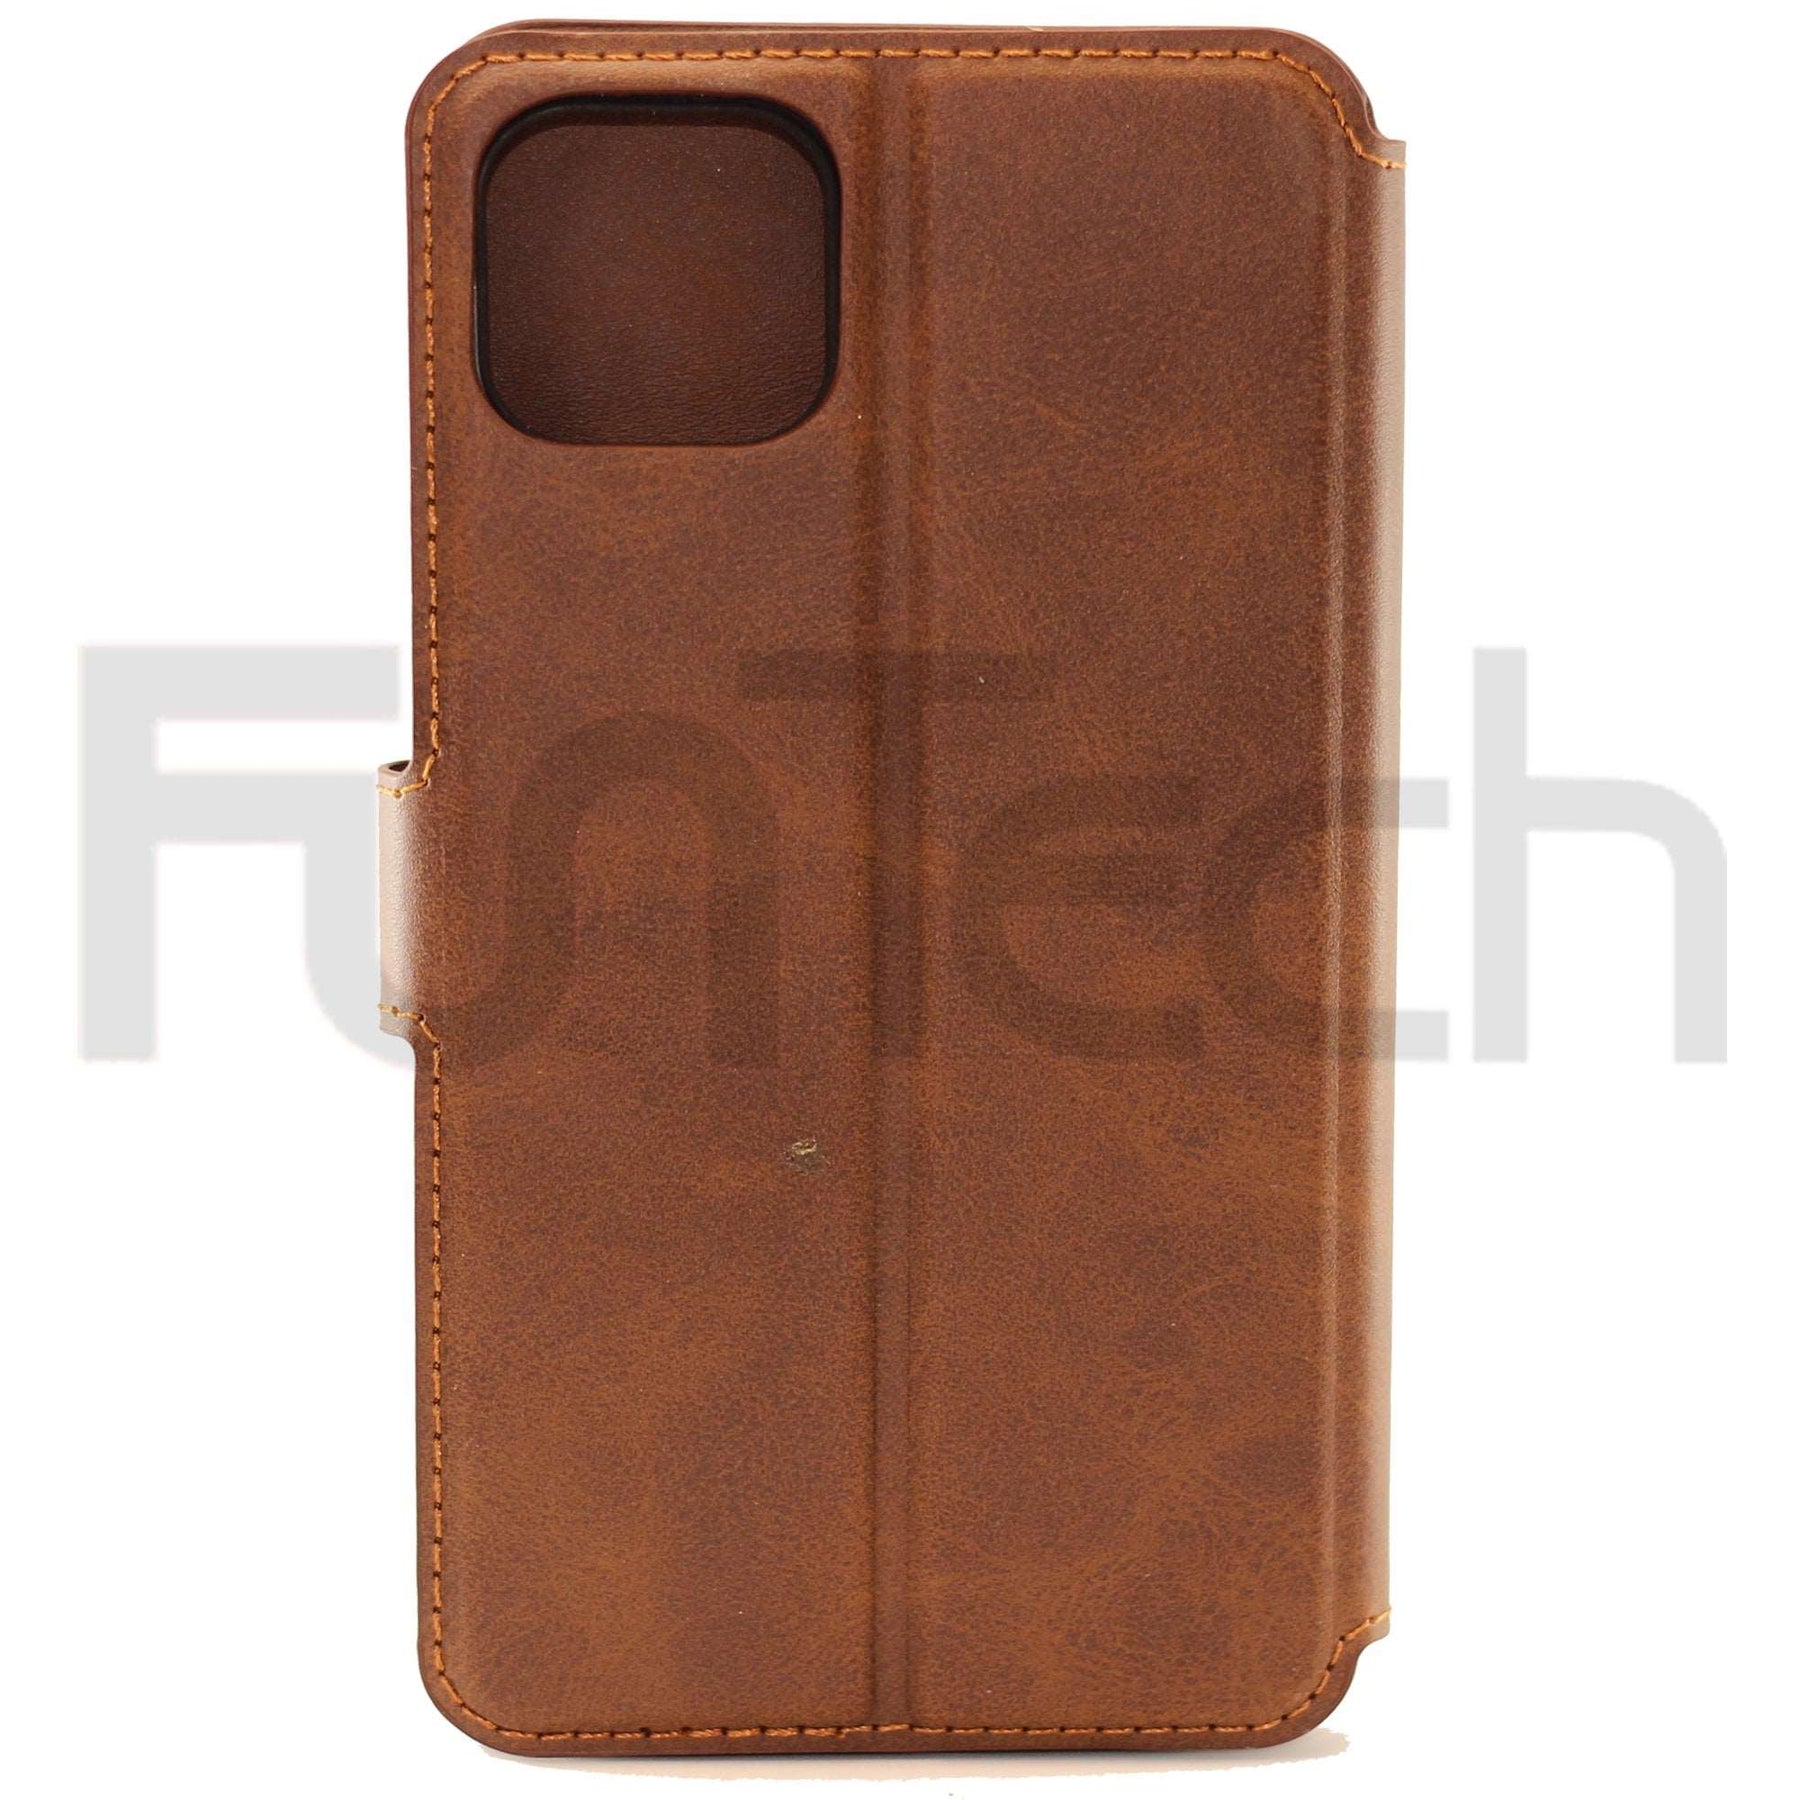  Leather Wallet Case Color 